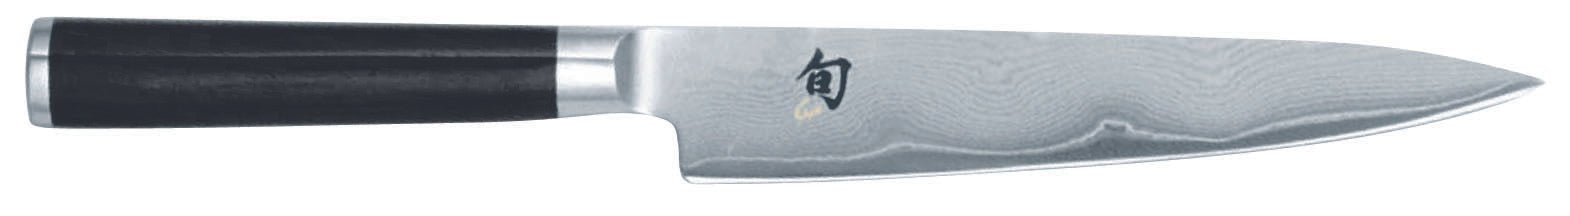 KAI Shun 2 Piece Knife Set - Chef Knife & Utility Knife - KAI-DMS-220 - The Cotswold Knife Company